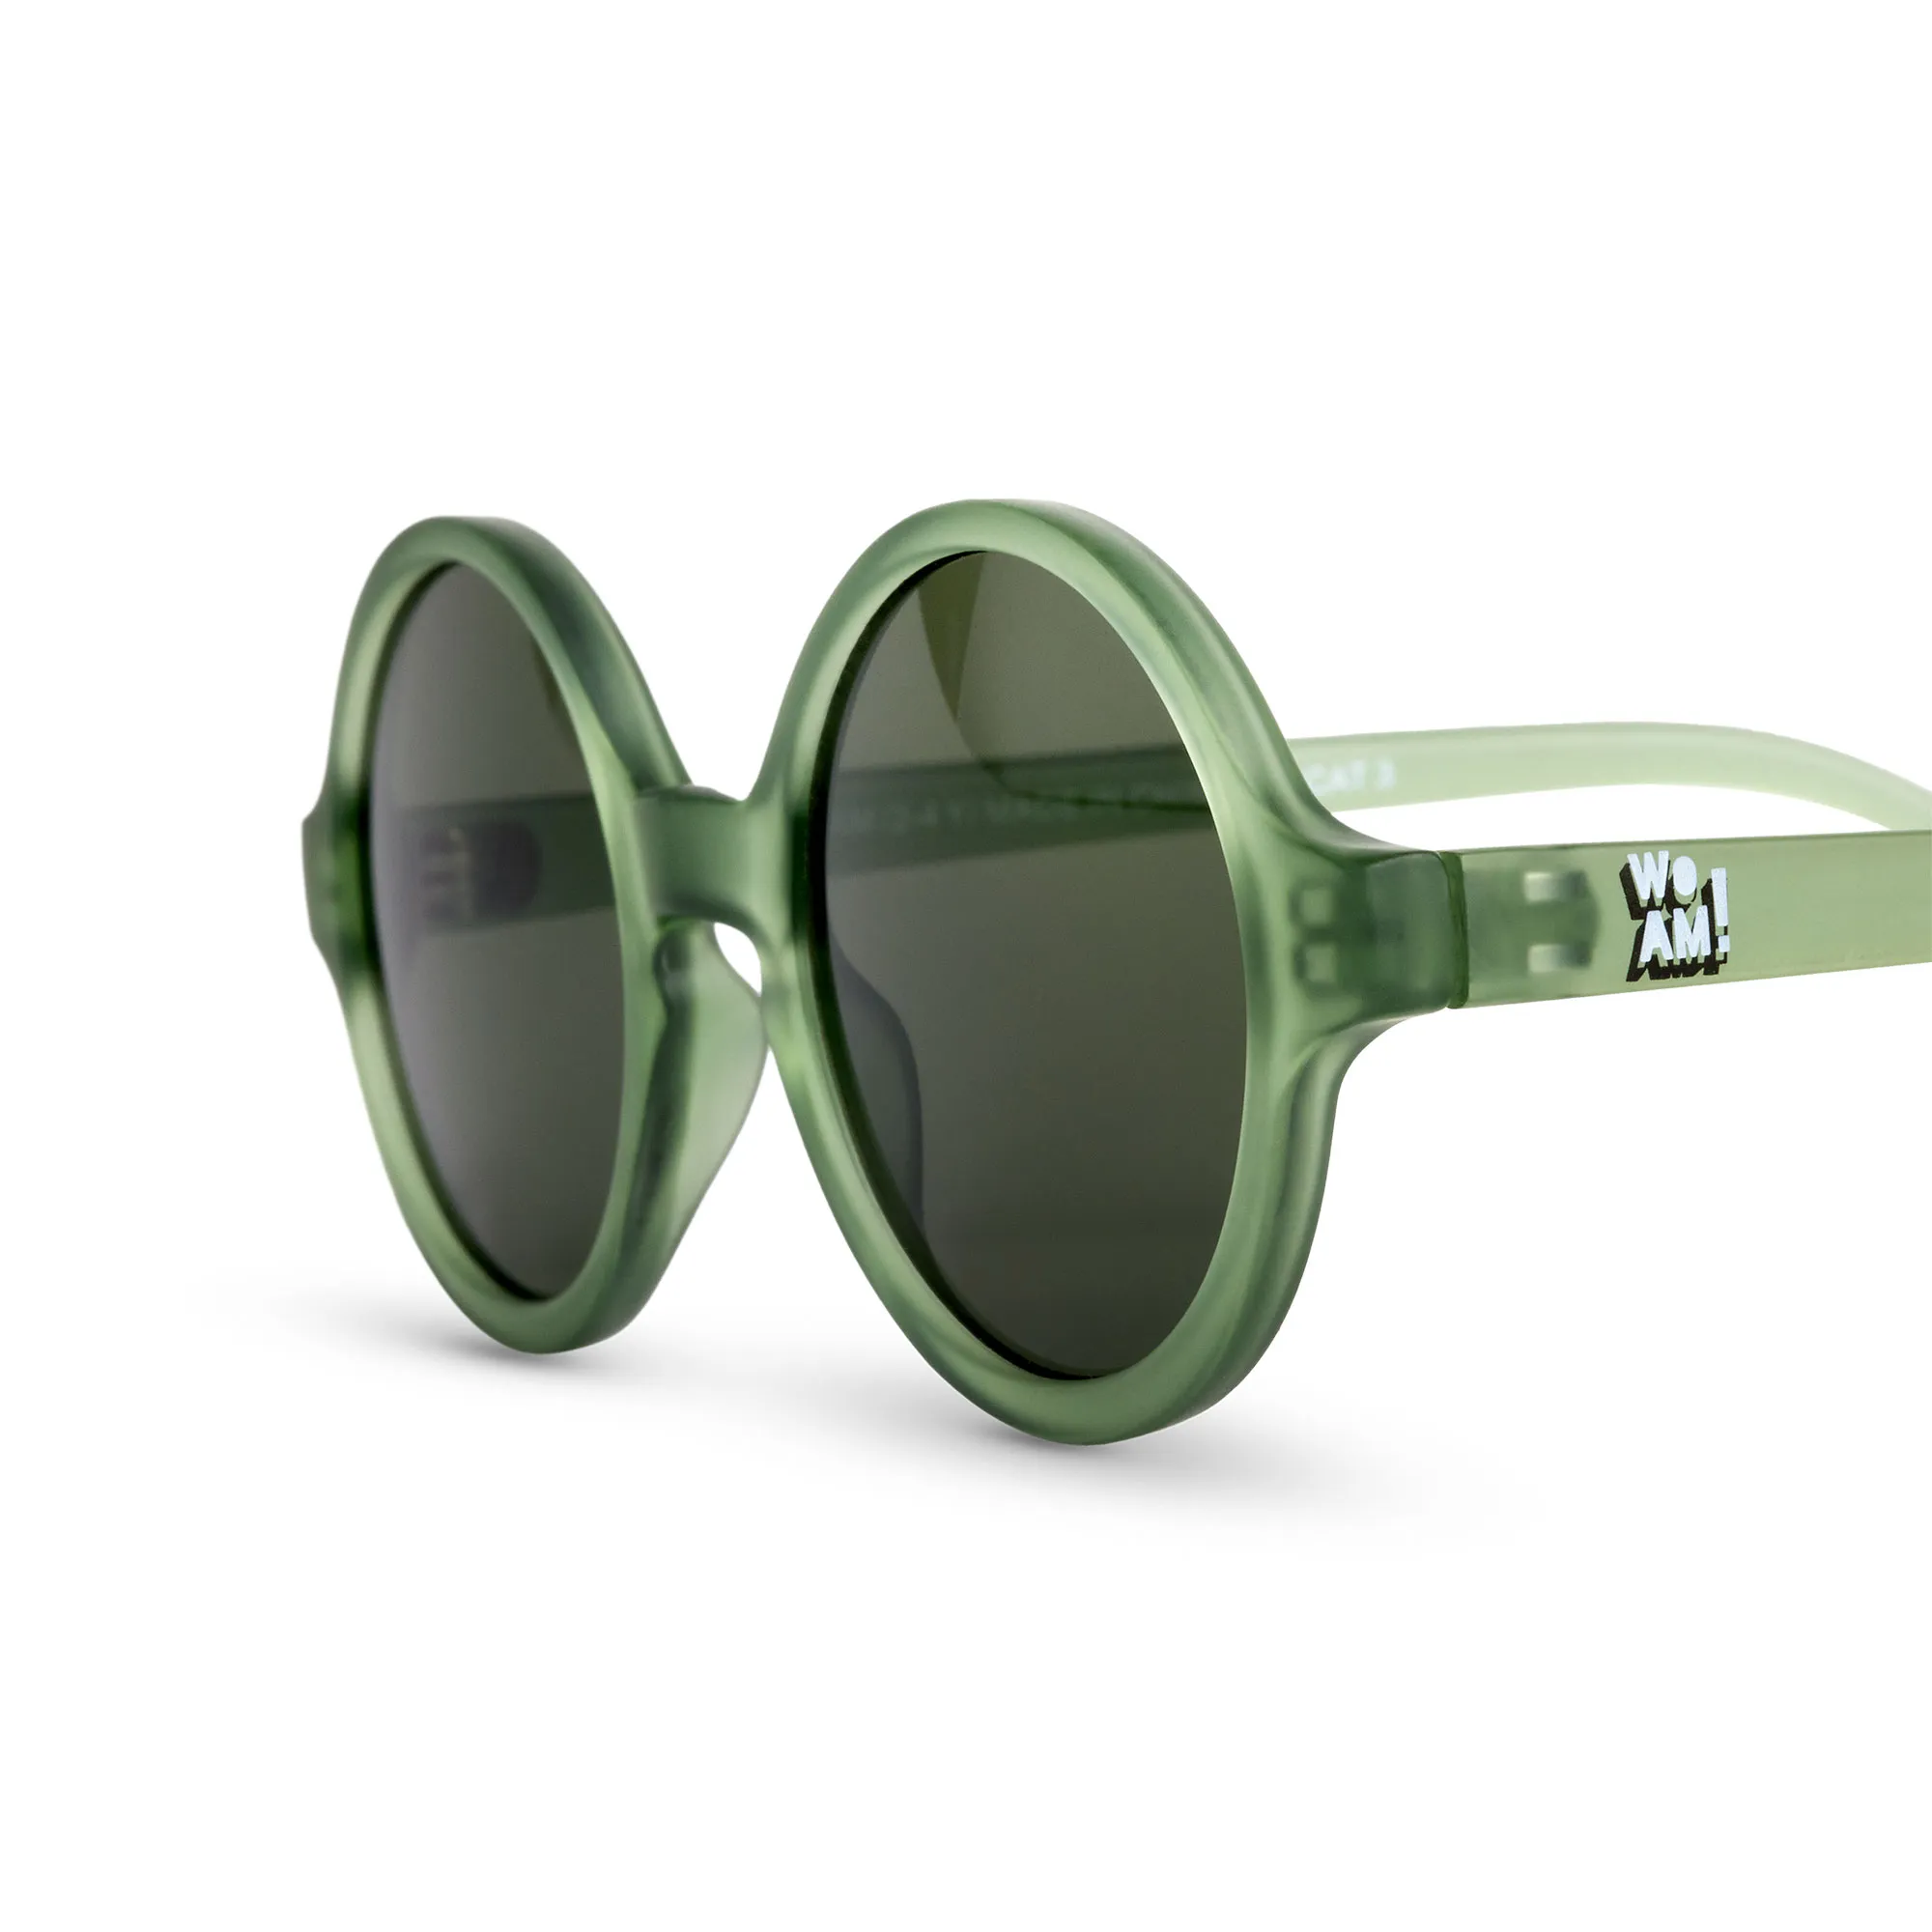 WOAM slnečné okuliare 0-2 roky - Bottle Green 1×1 ks, detské slnečné okuliare